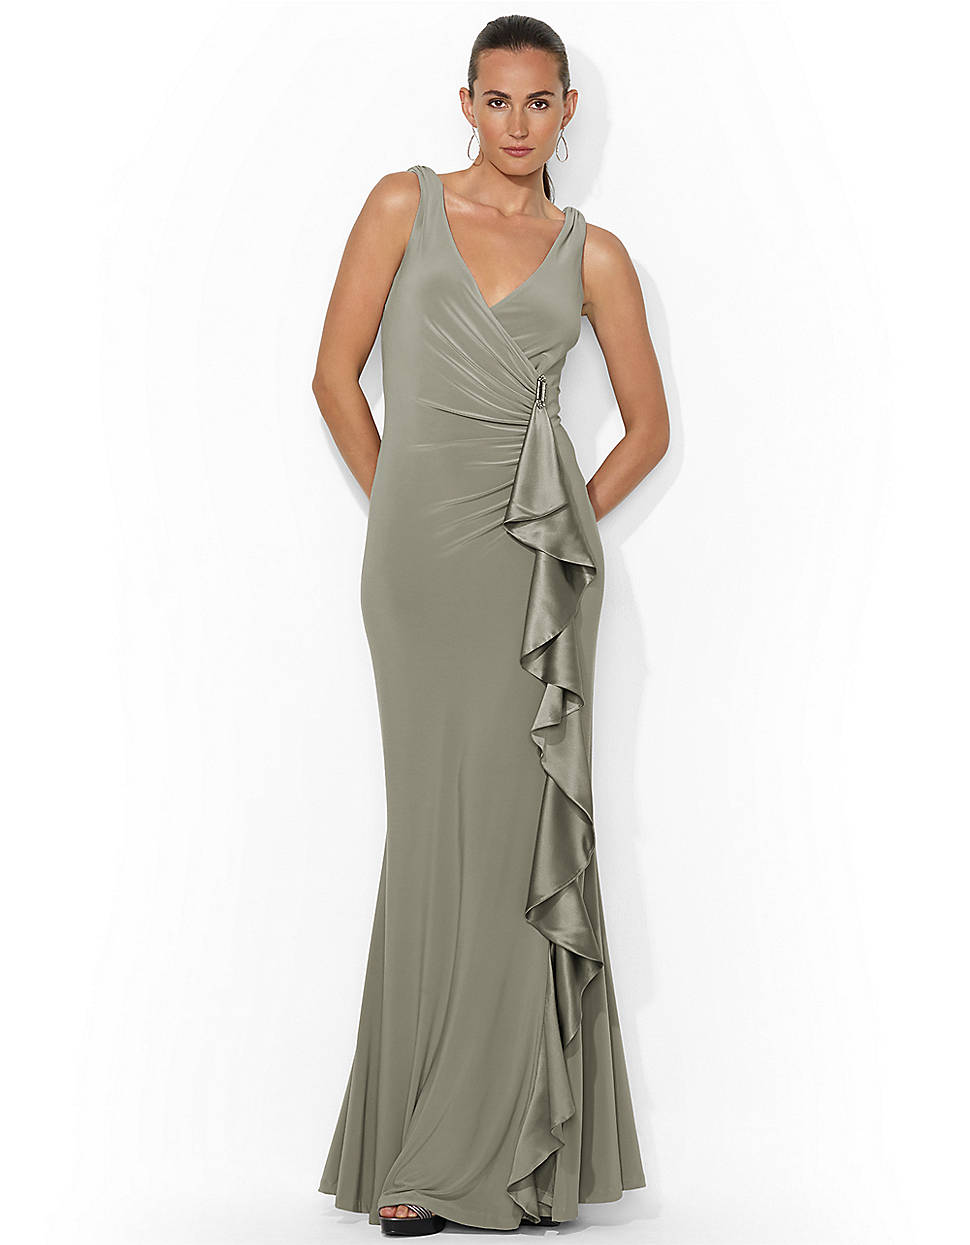 Lyst - Lauren By Ralph Lauren Sleeveless Ruched Ruffled Gown in Gray